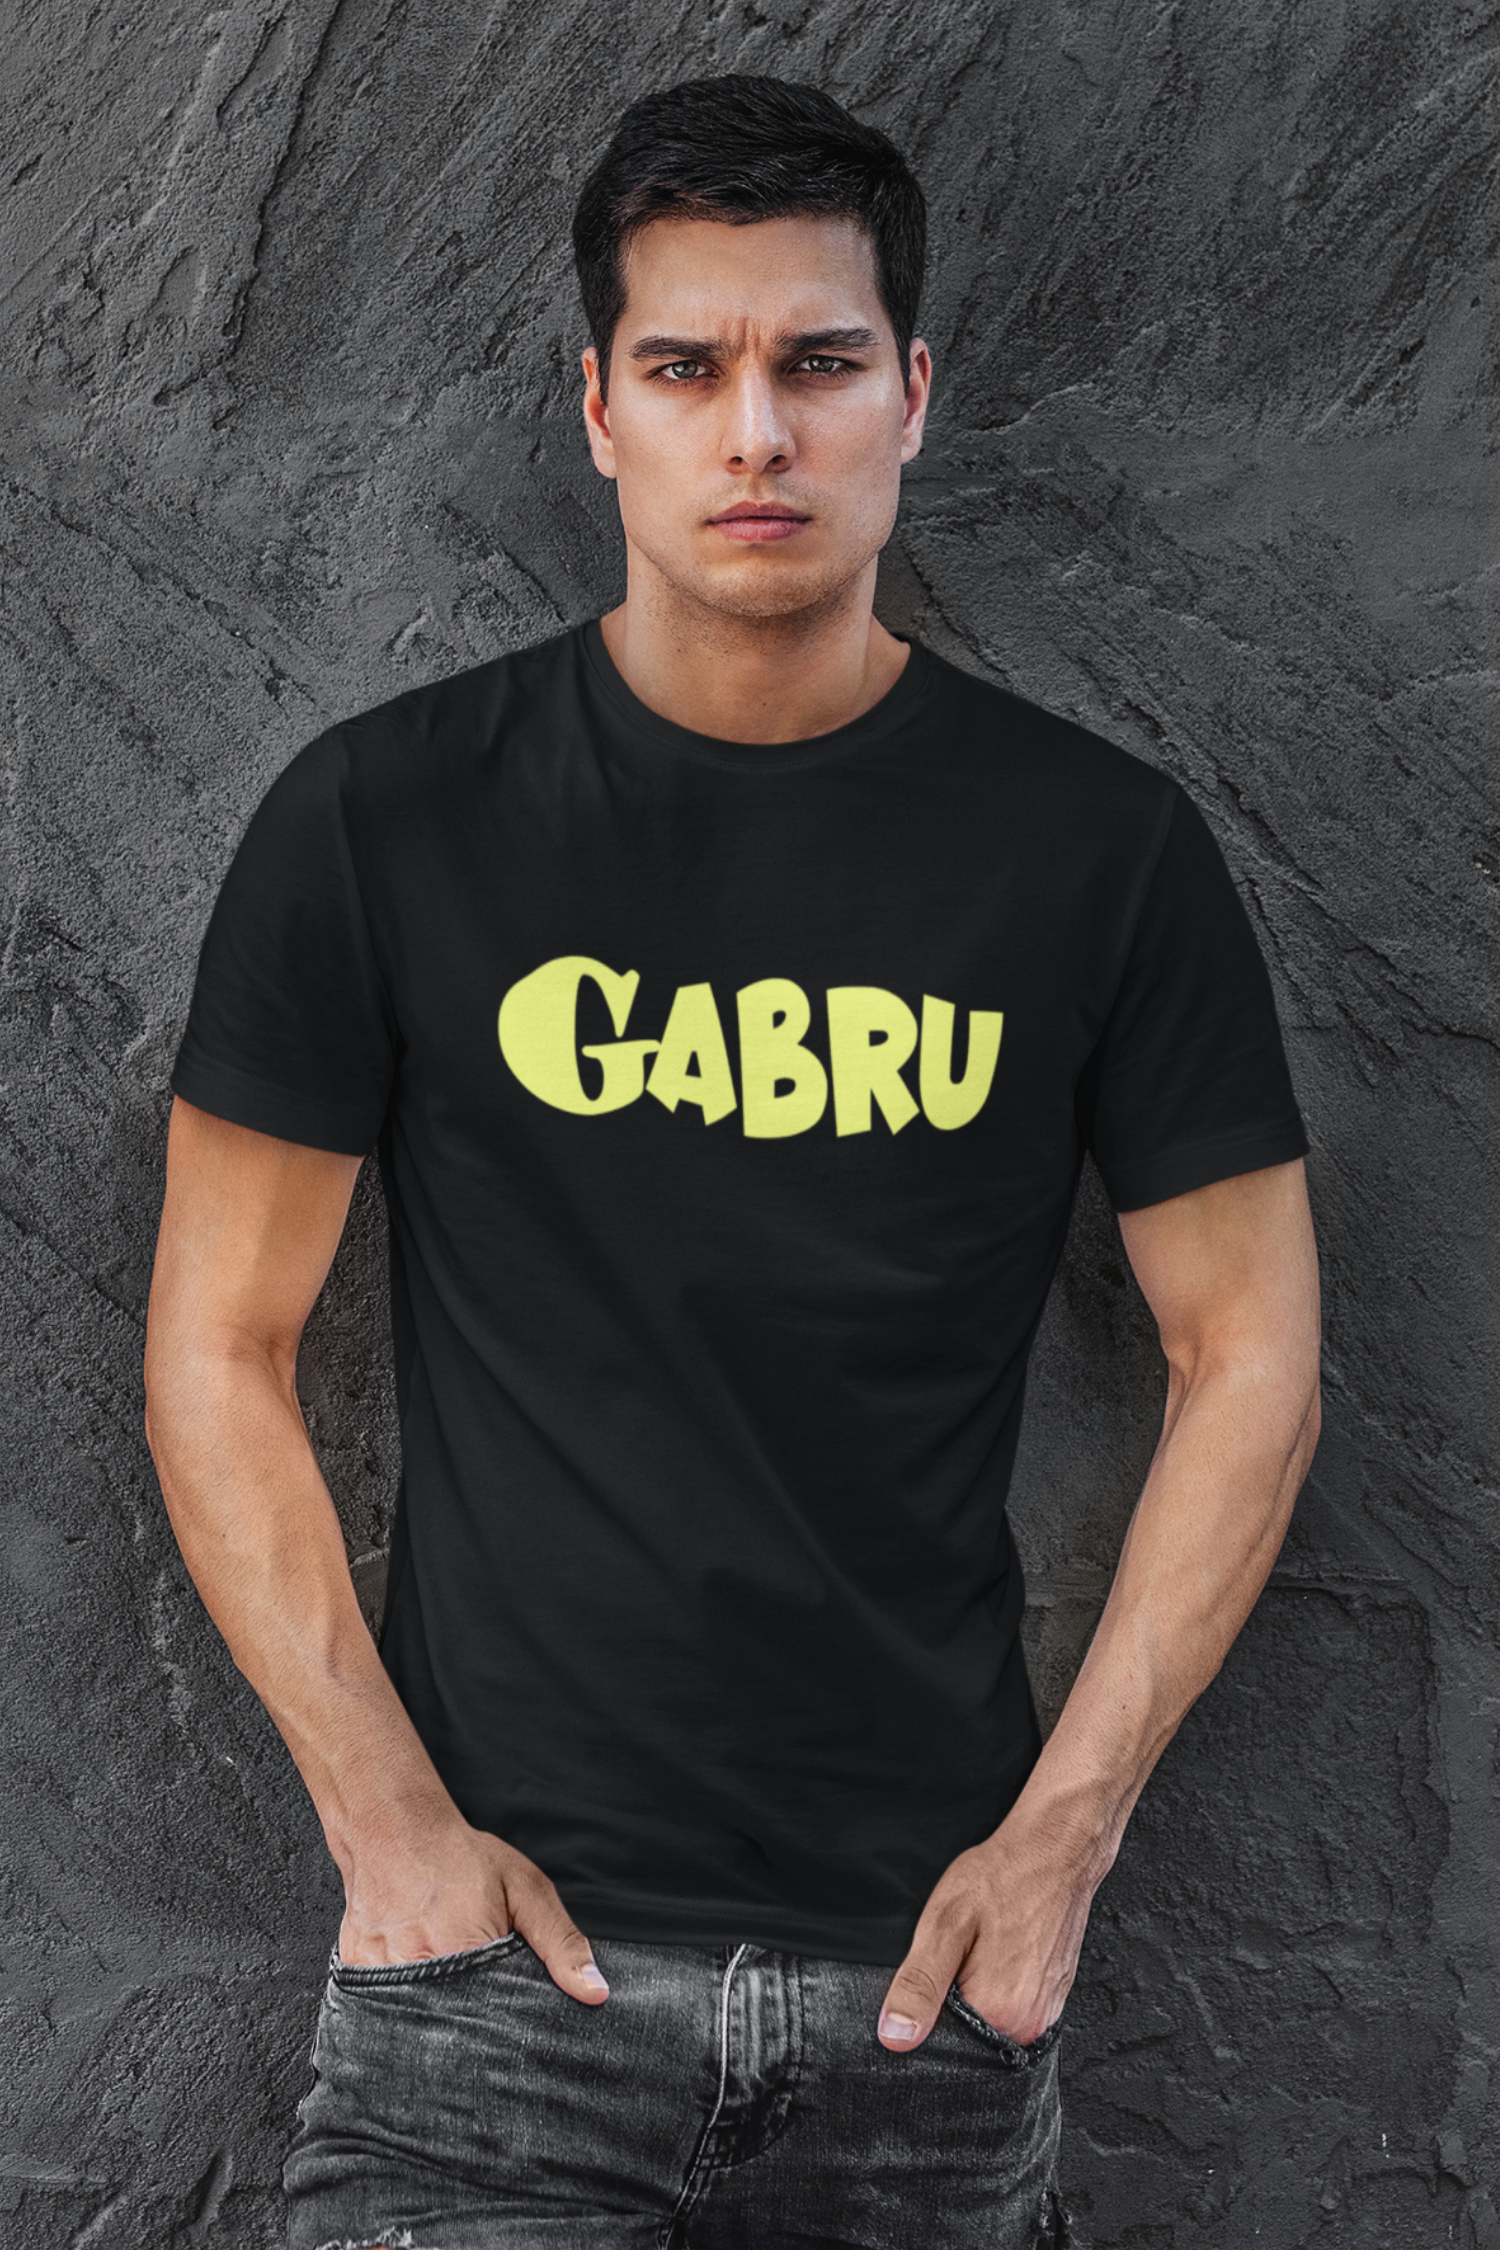 Gabru printed t shirt for men online in India - nautunkee.com